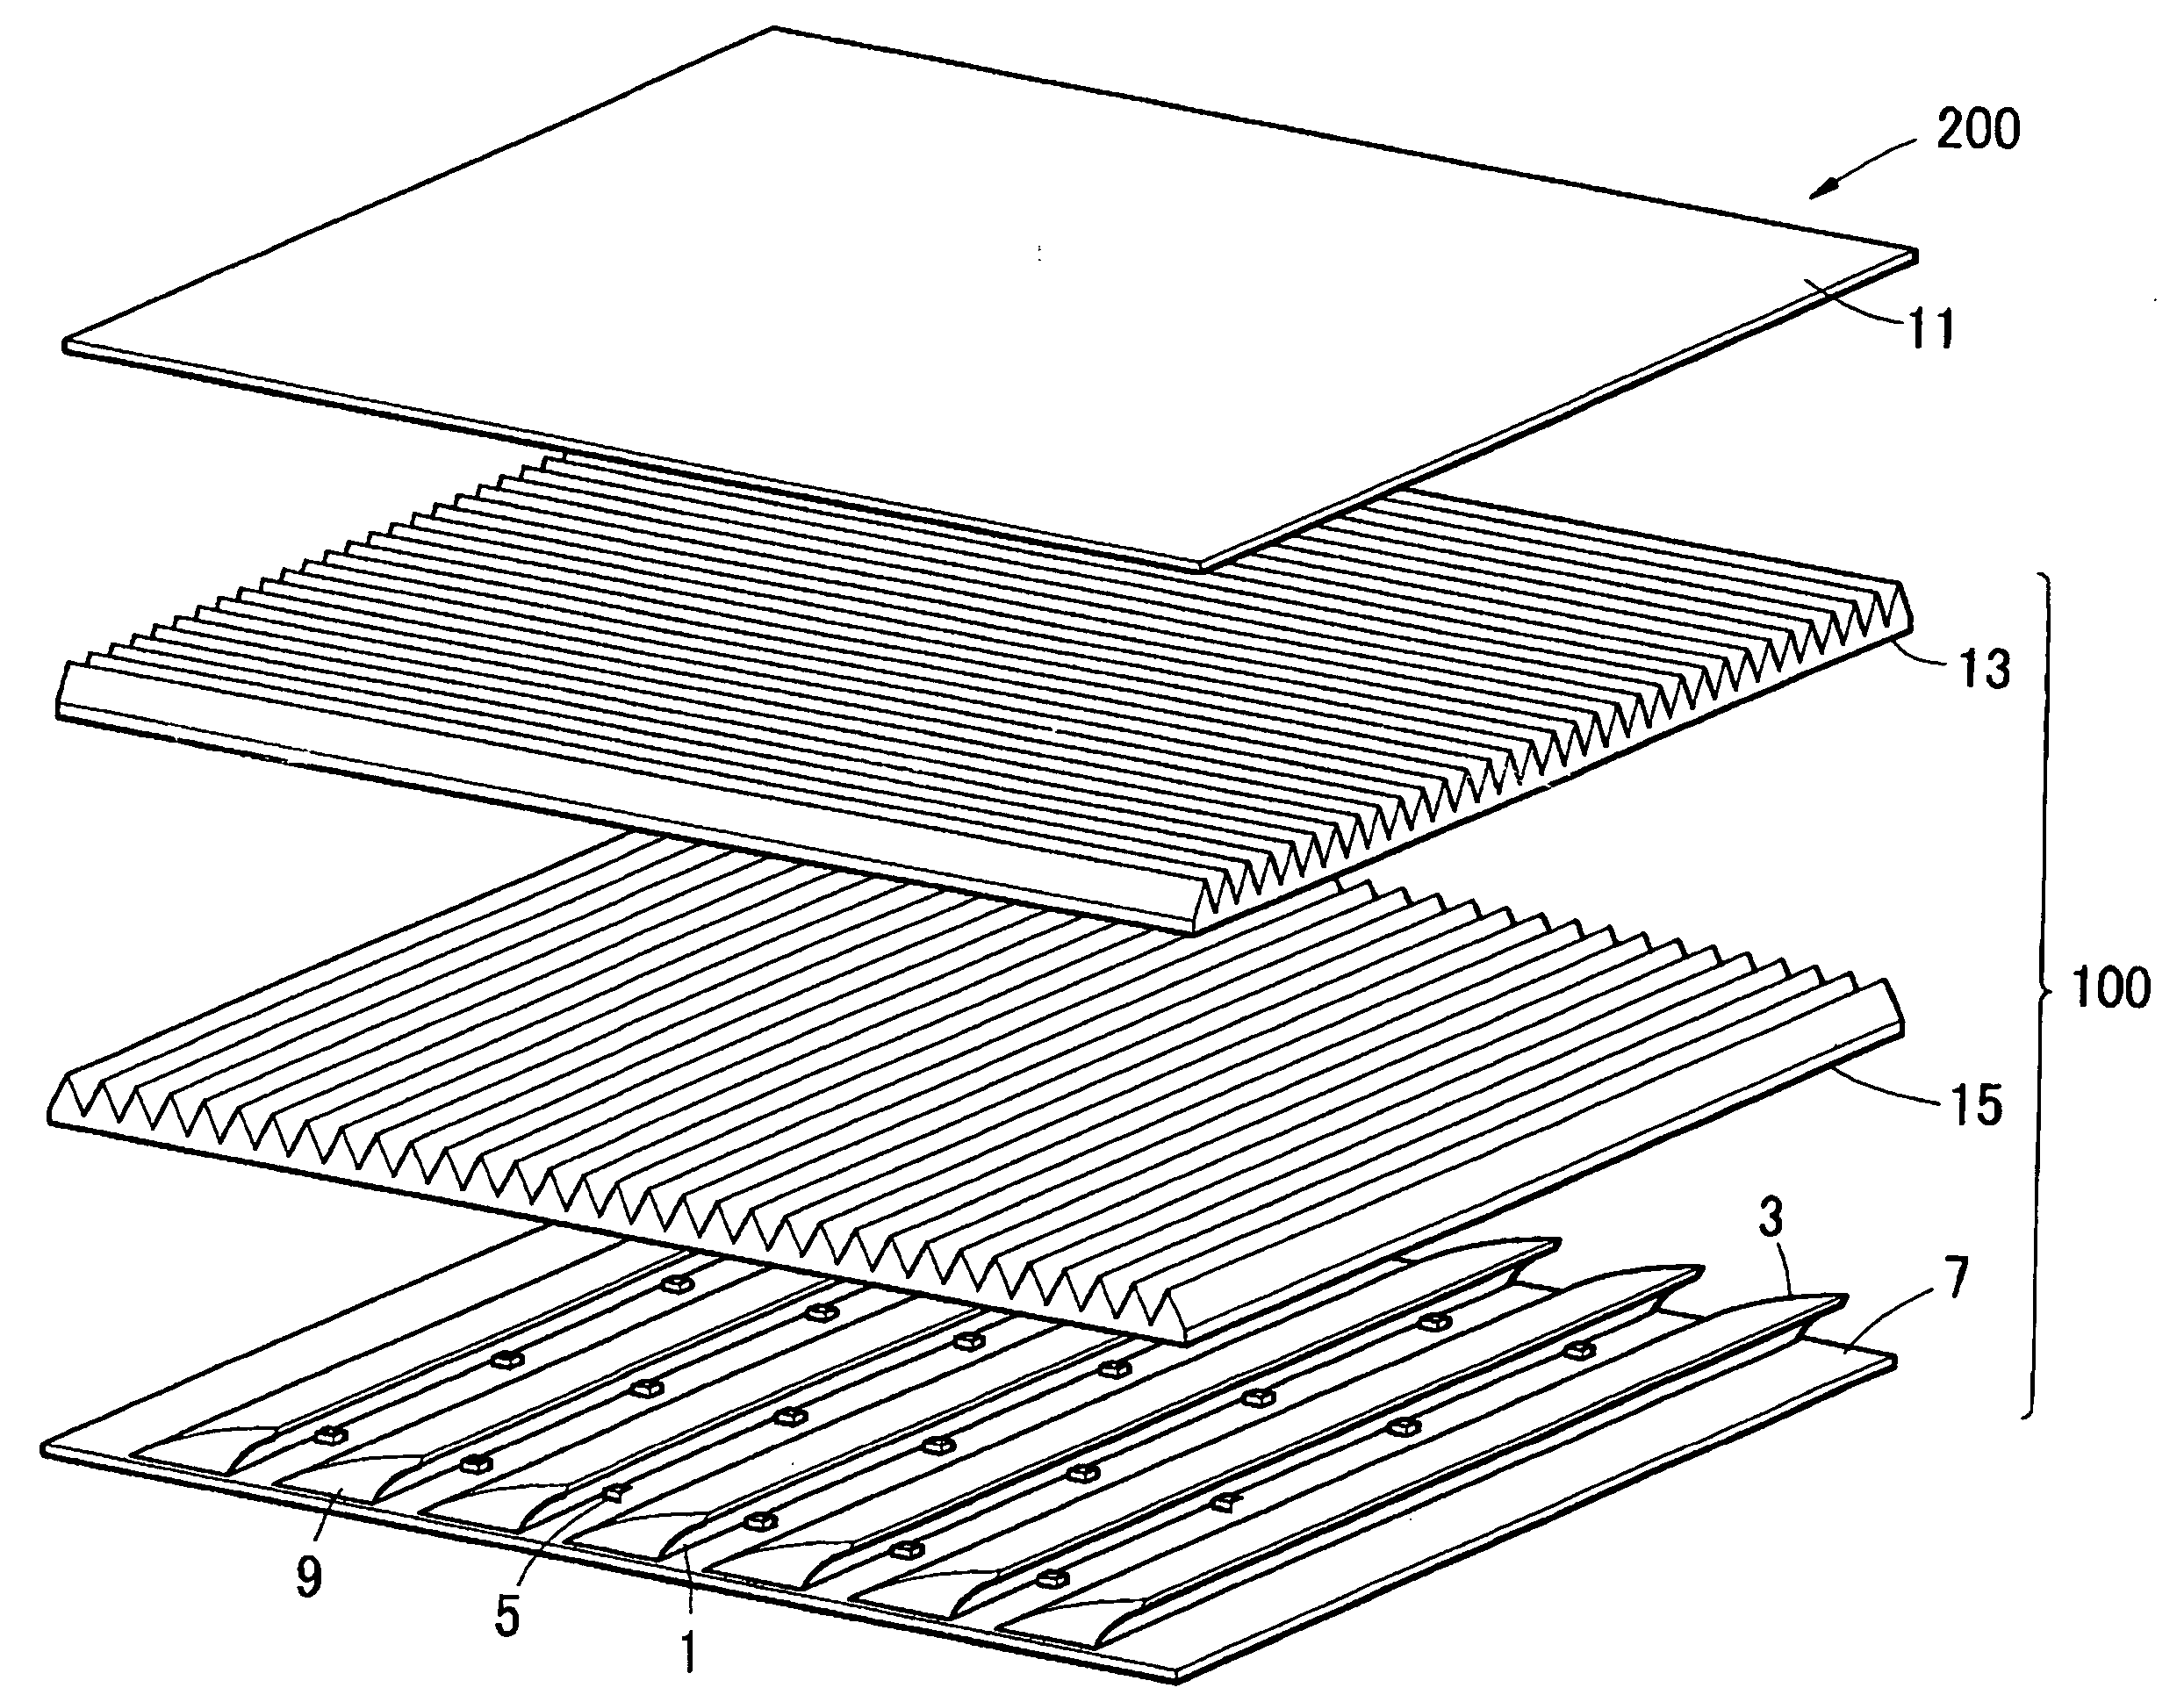 Surface light emitting apparatus